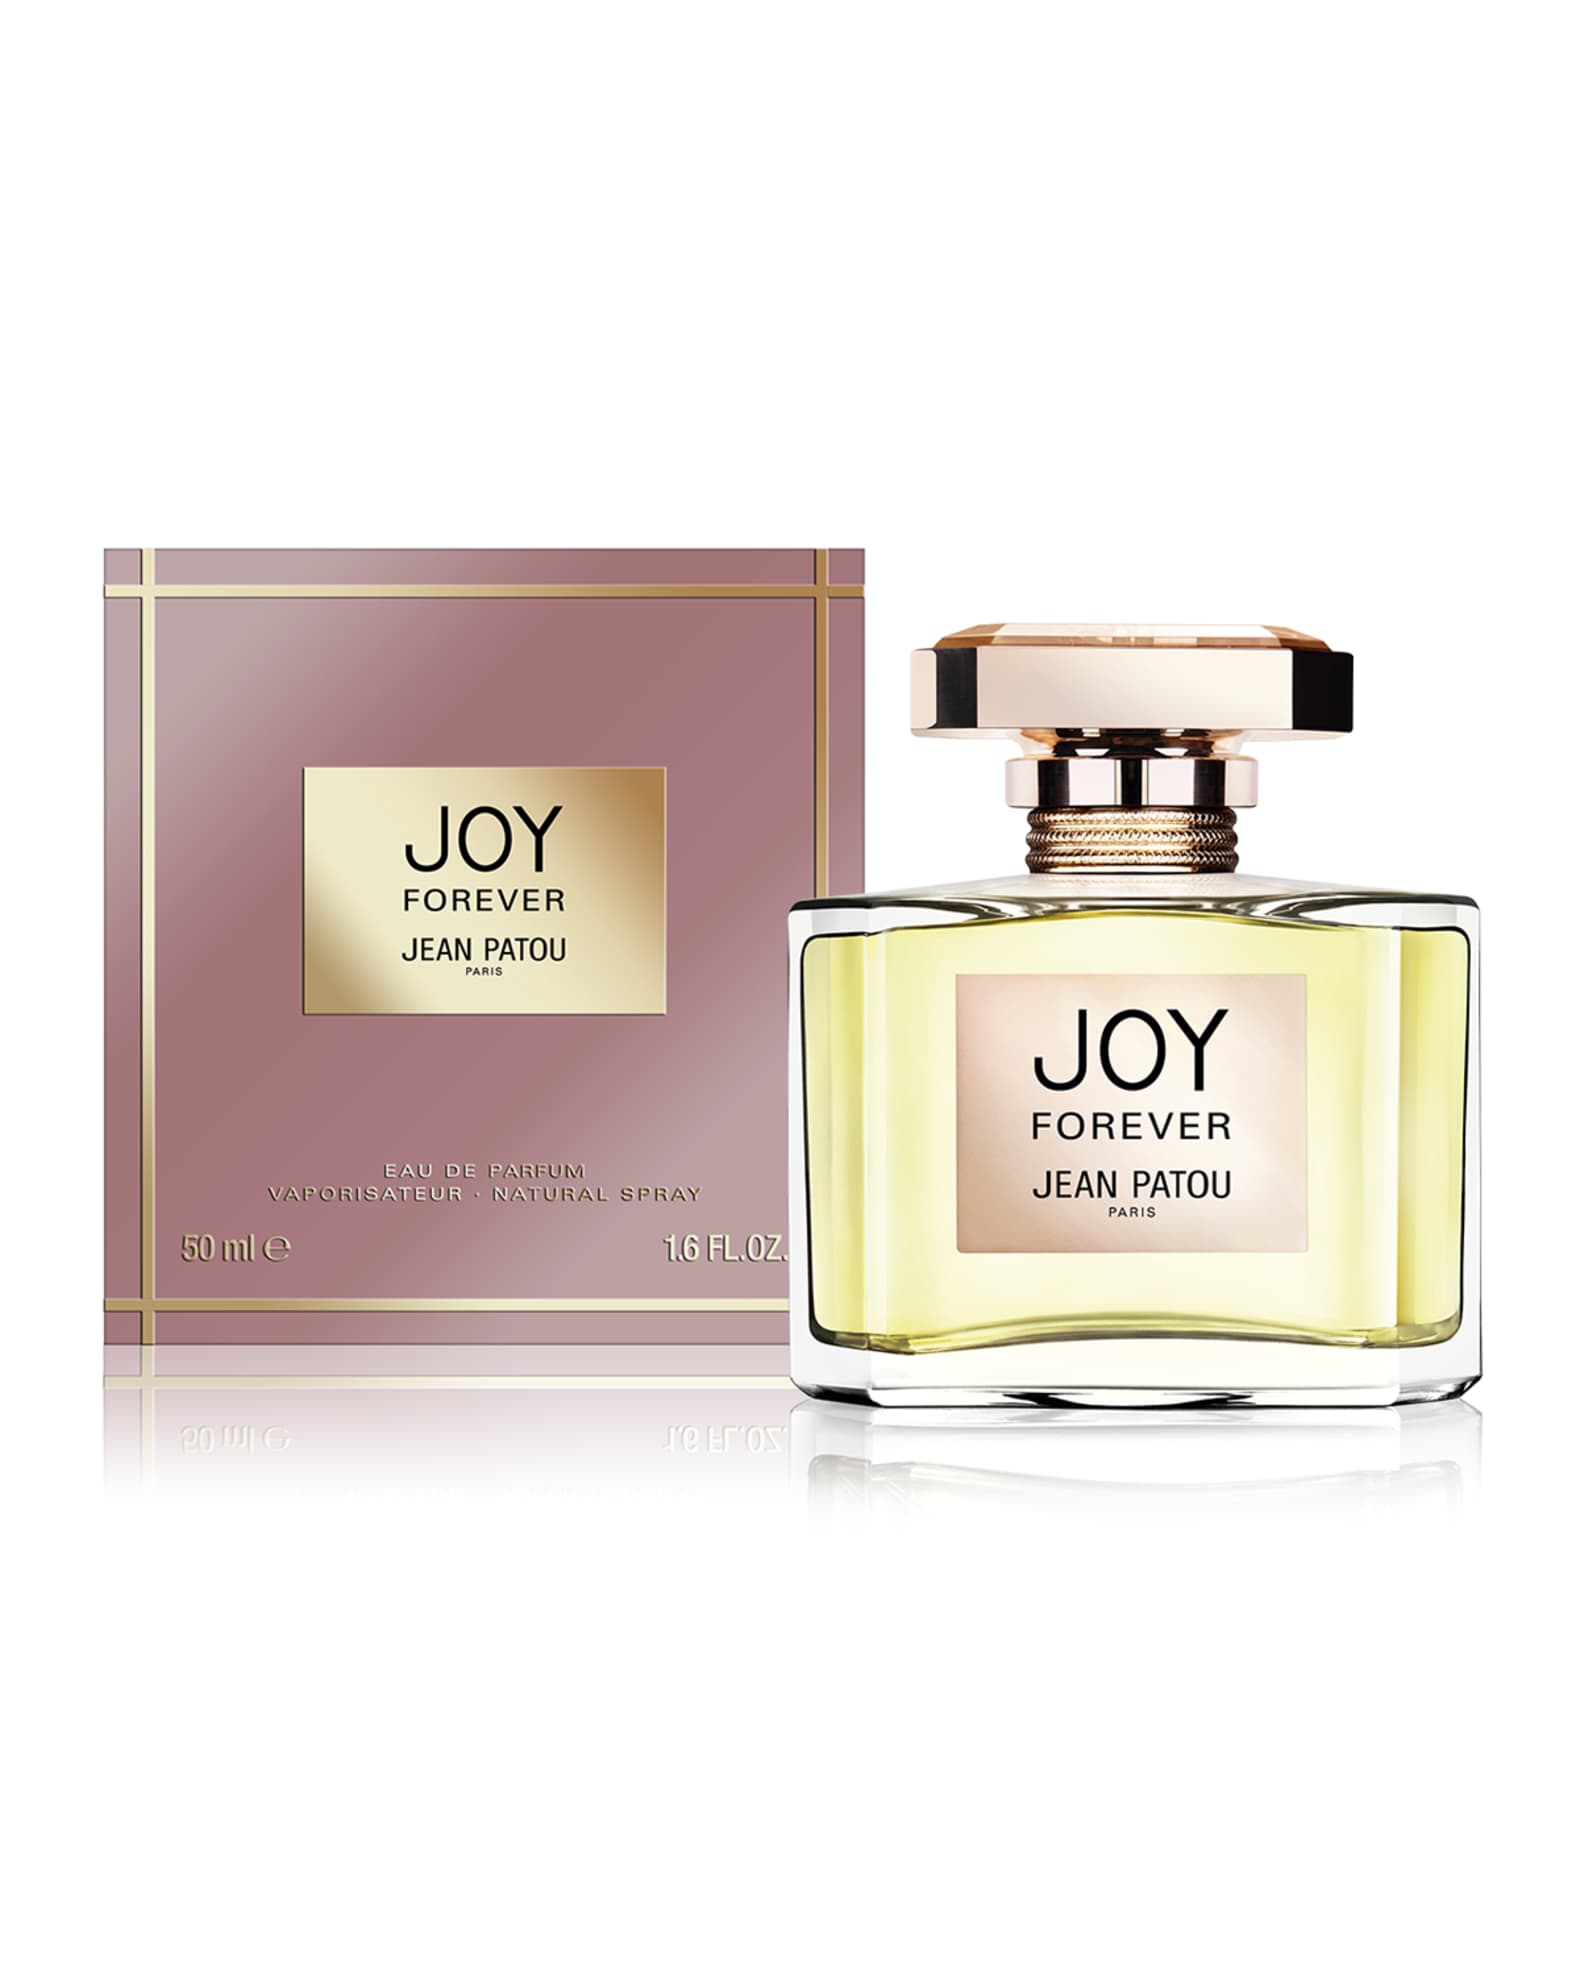 Joy Forever Eau de Parfum, 50ml and Matching Items | Neiman Marcus